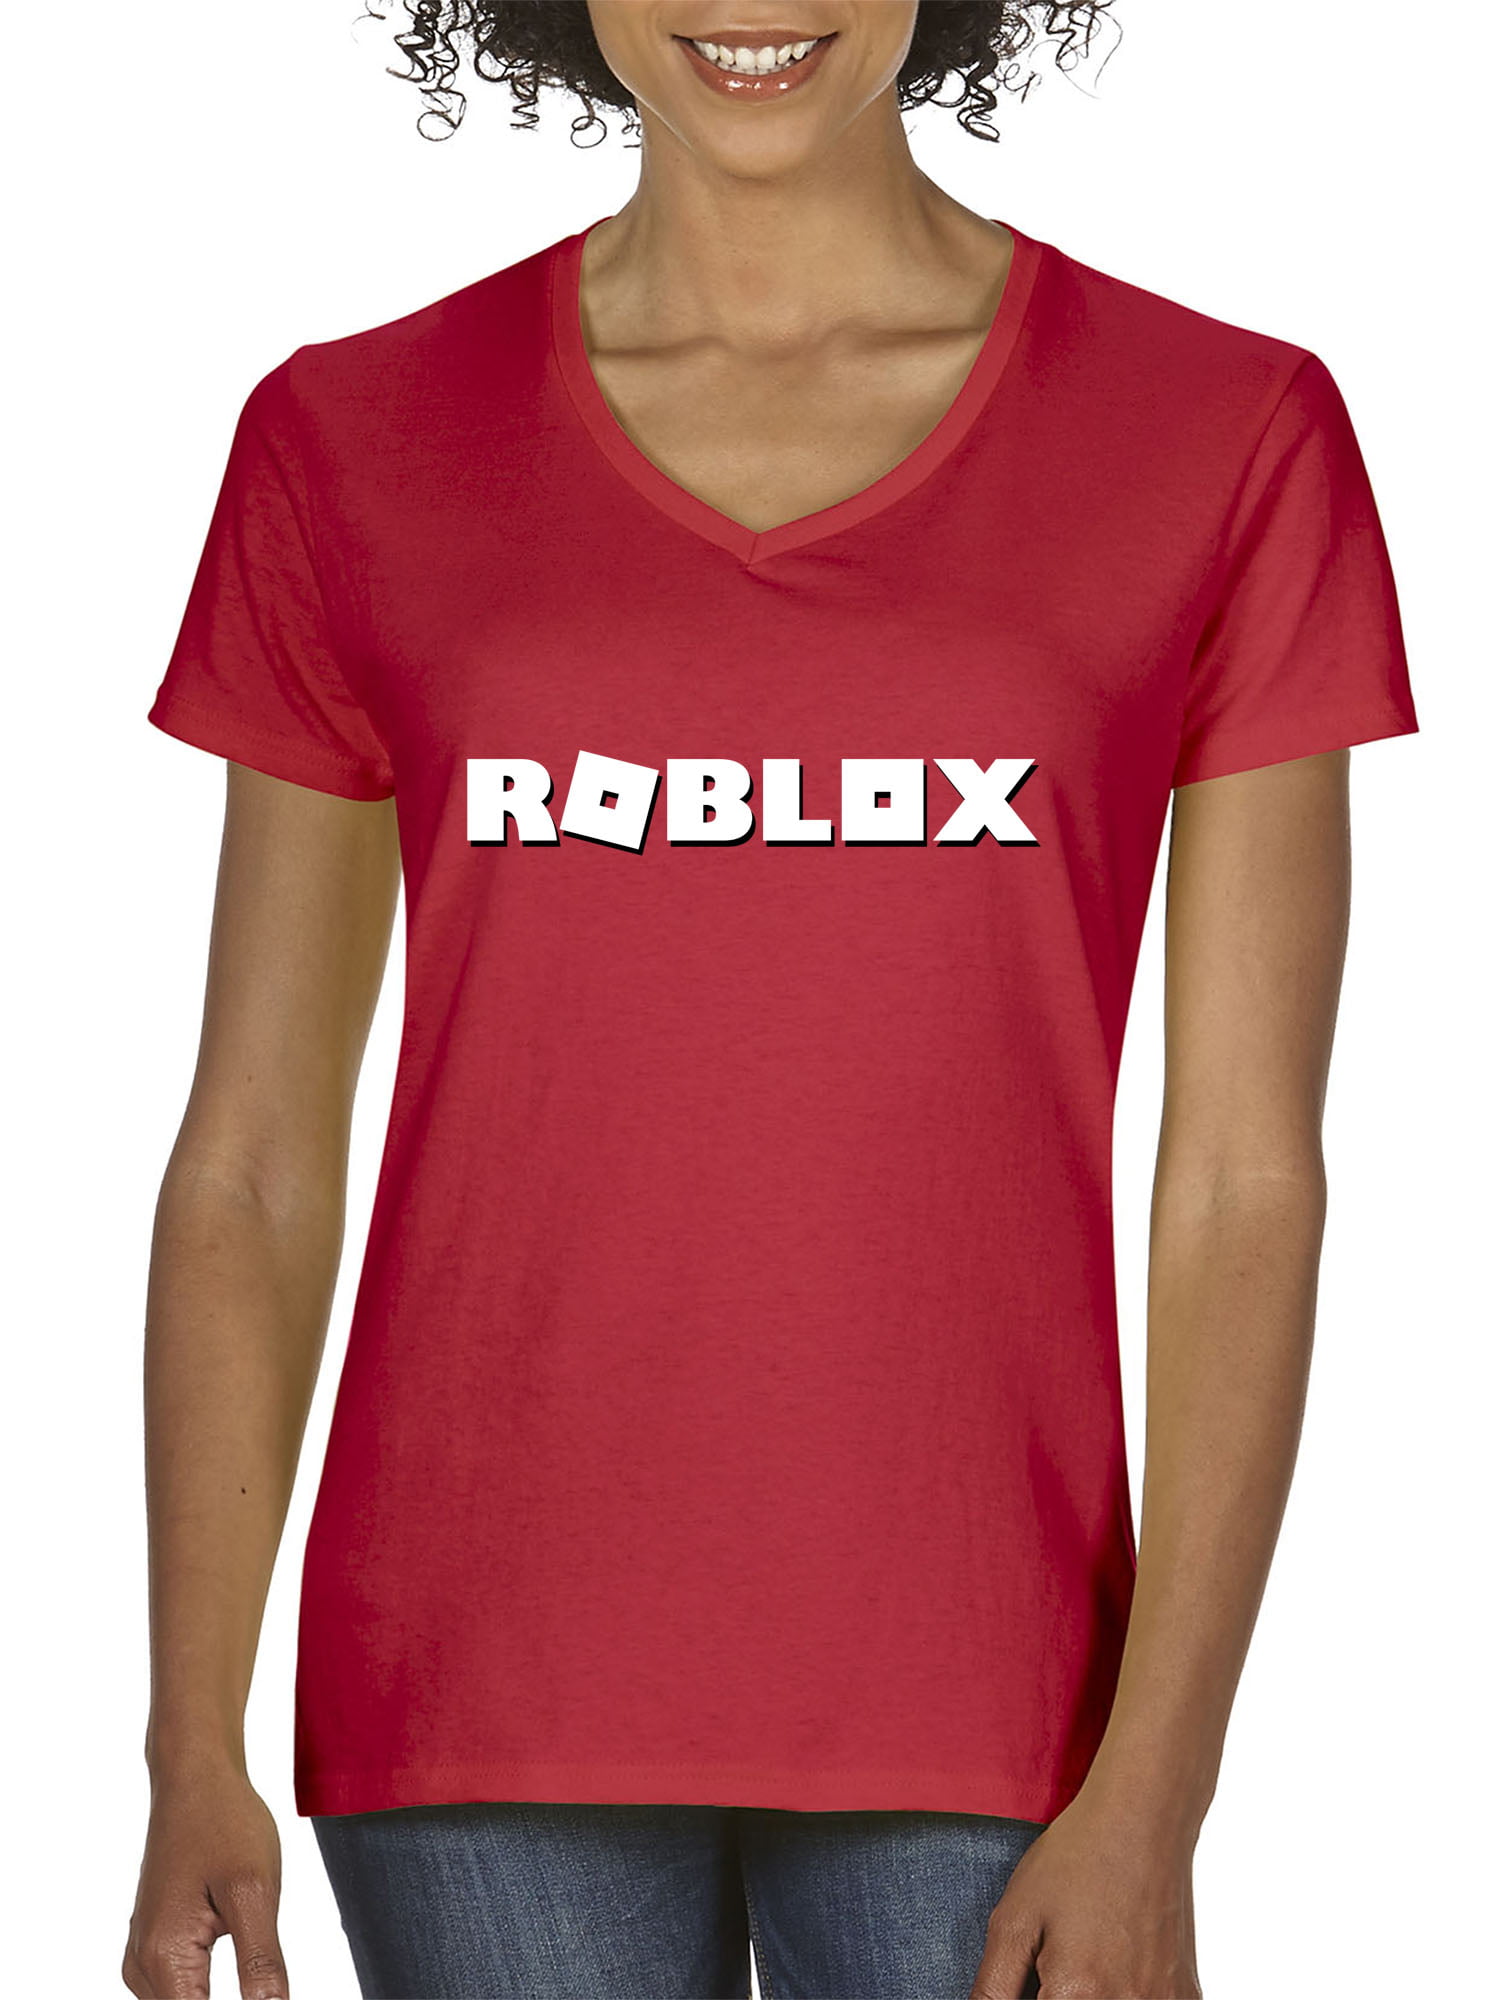 New Way New Way 923 Women S V Neck T Shirt Roblox Logo Game Accent Xs Red Walmart Com Walmart Com - gucci logo for roblox t shirt